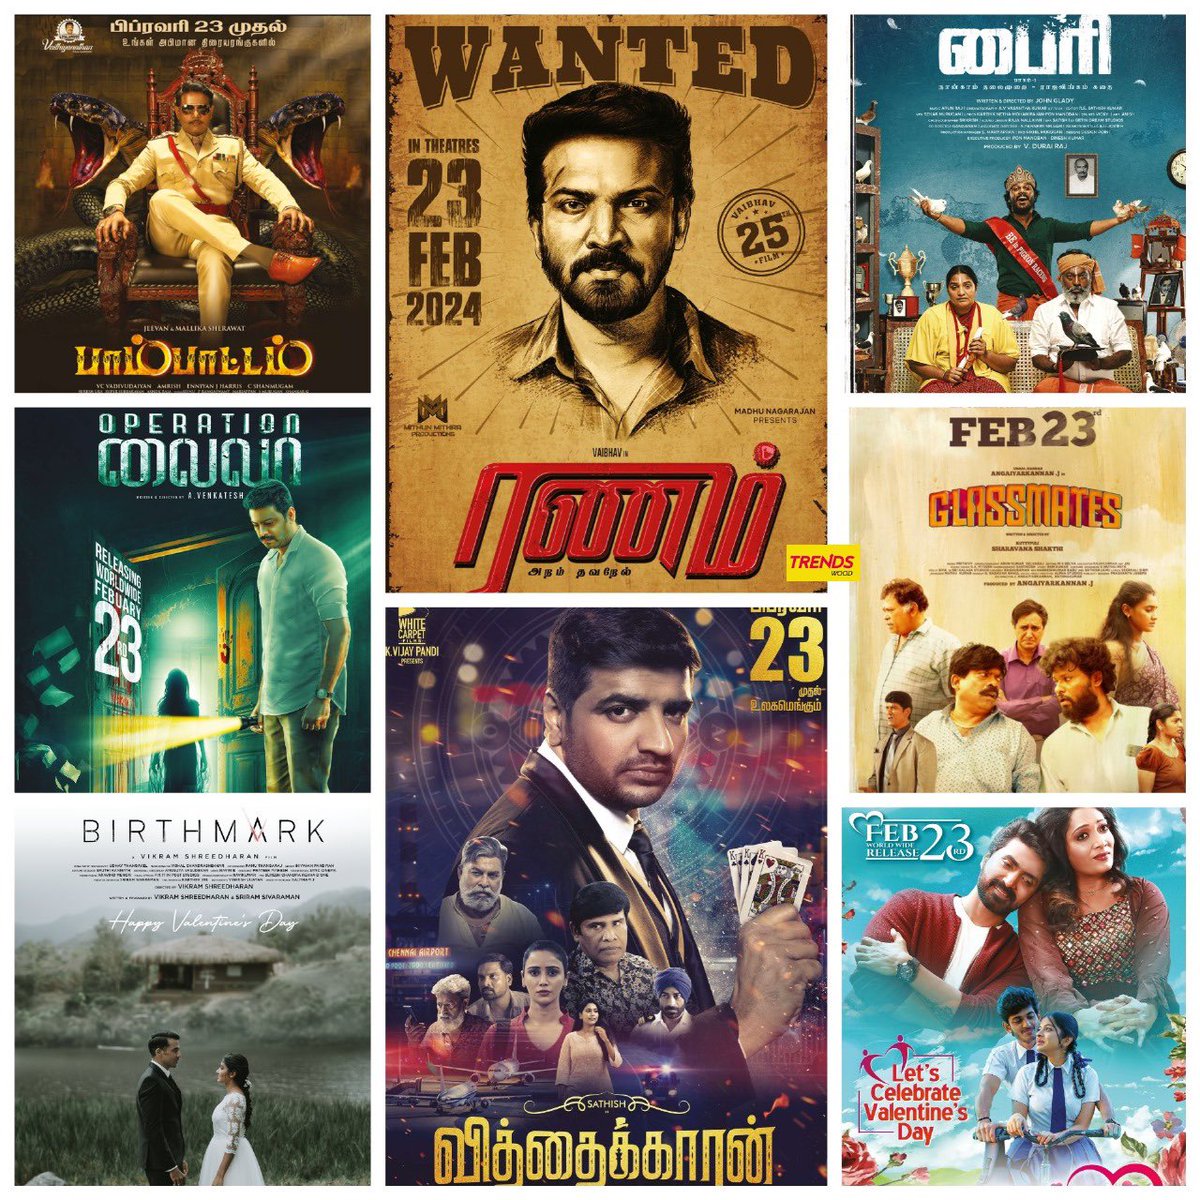 Tons of Tamil Films Releasing this Week - Feb 23.

#Byri - Newbies
#Ranam - Vaibhav
#Vithaikkaaran - Sathish
#Pambattam - Jeevan
#Birthmark - Mirnaa
#Glassmates - Mayilsamy
#OperationLaila - Srikanth
#NinaivellamNeeyada - Prajin